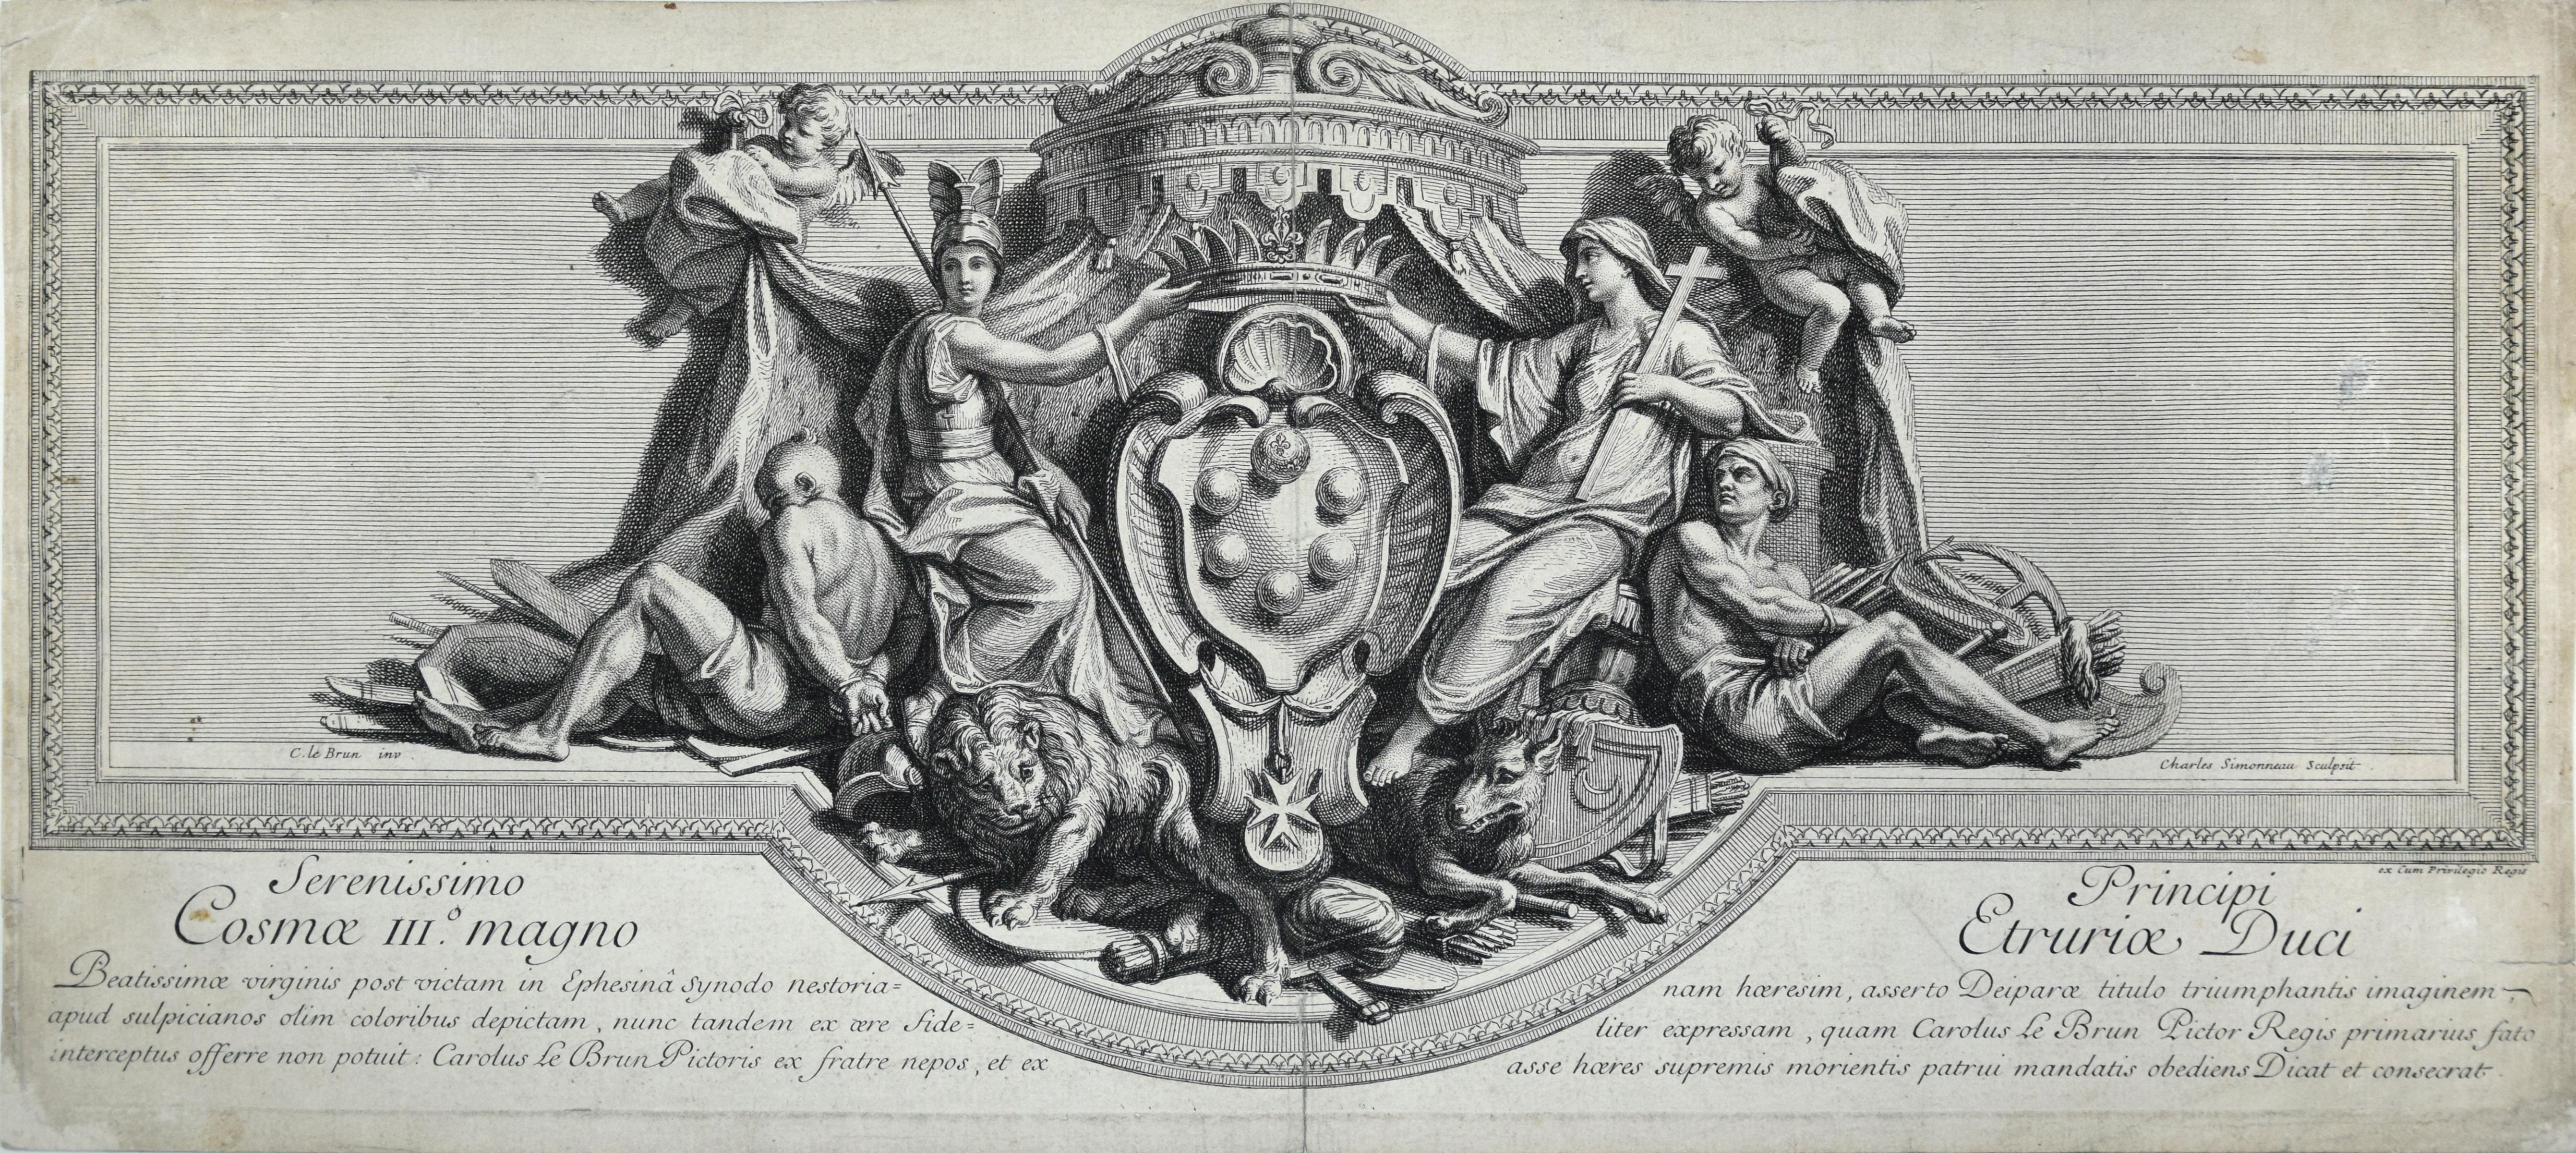 Principi Etruriae Duci - Etching by Charles Simonneau - Late 1600